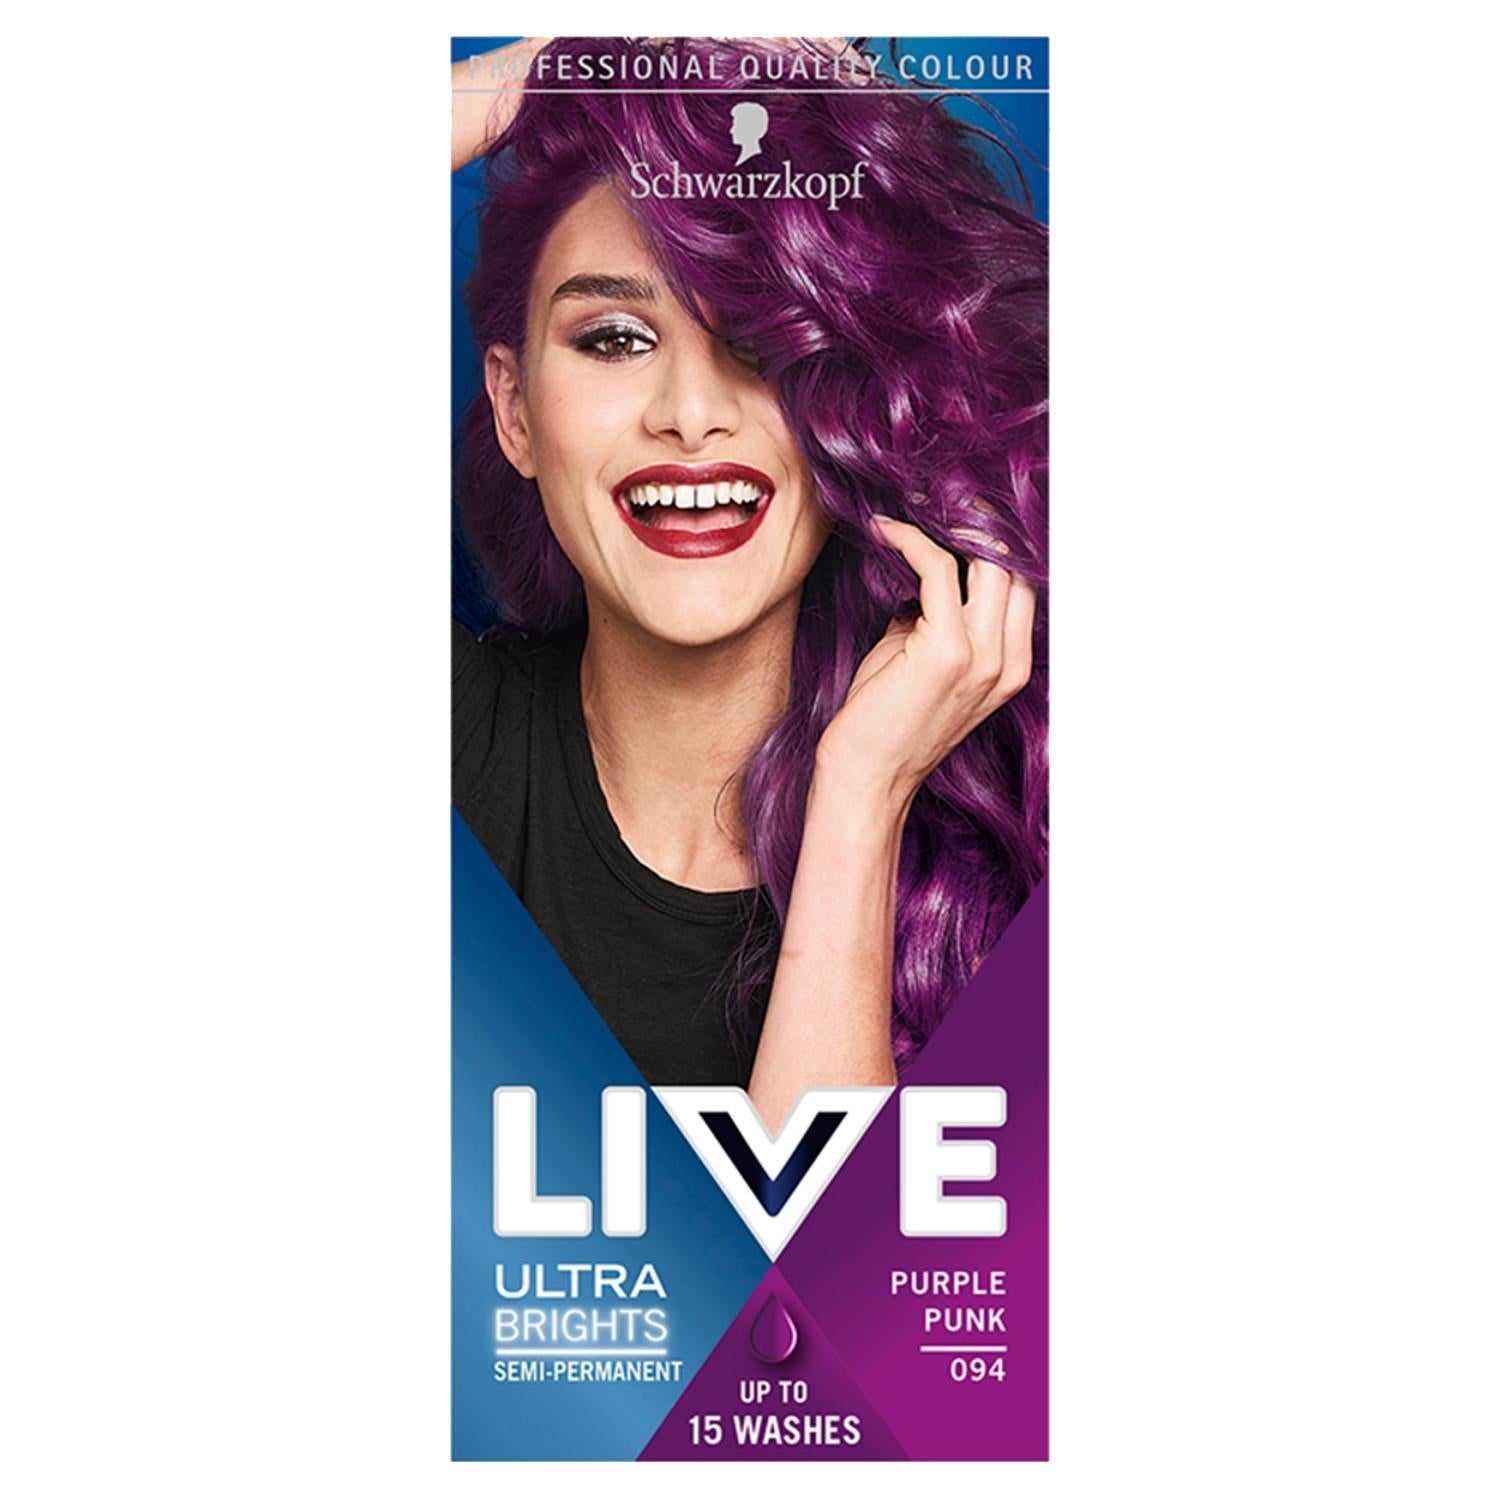 Schwarzkopf LIVE Purple Punk Semi-Permanent Hair Dye, Ultra Brights 094